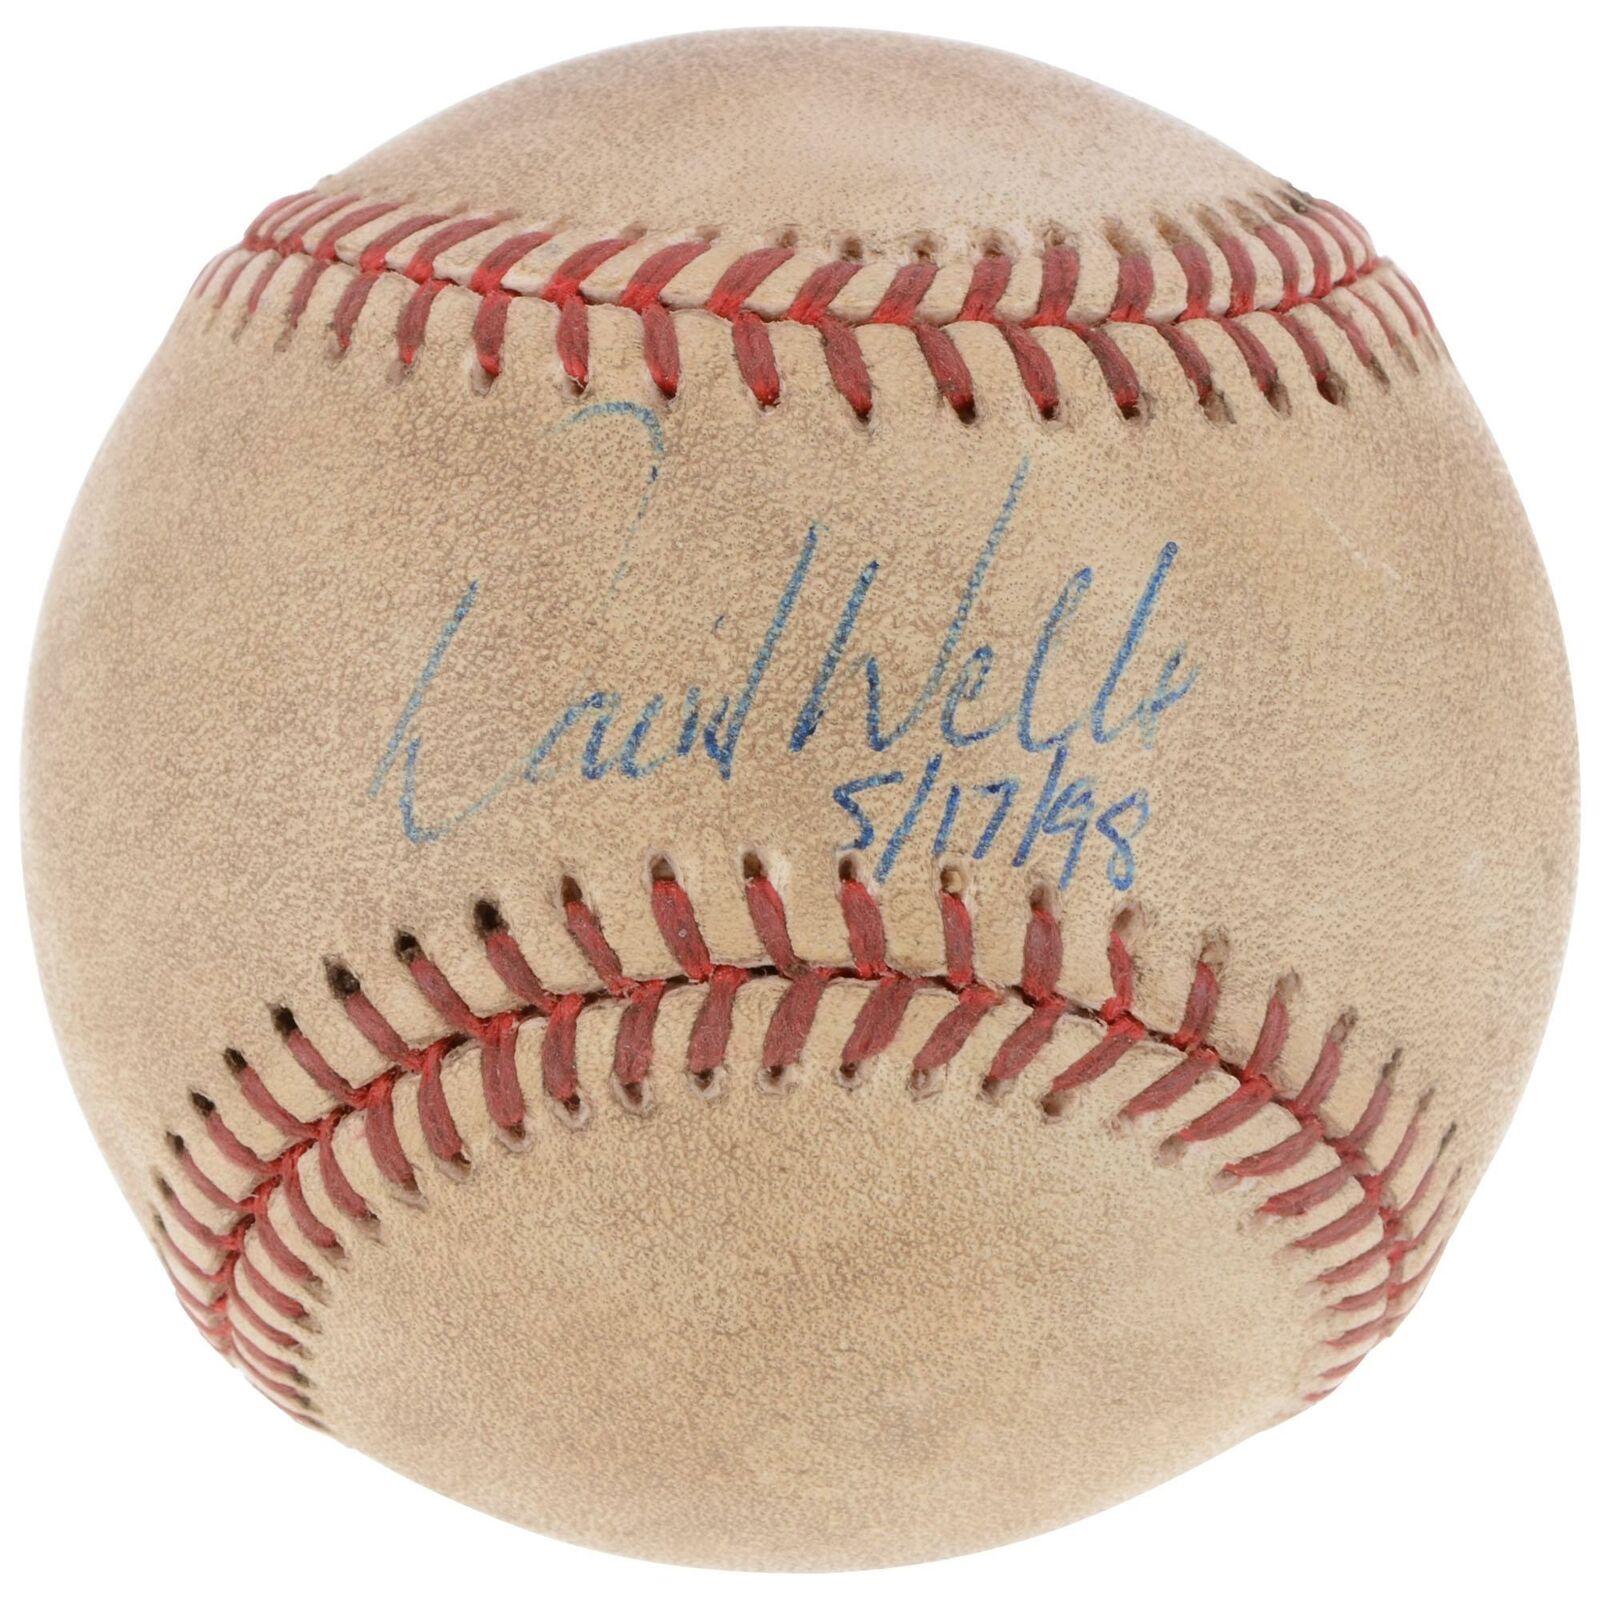 David Wells New York Yankees Game Used Signed Baseball & 5/17/98 Insc - Beckett